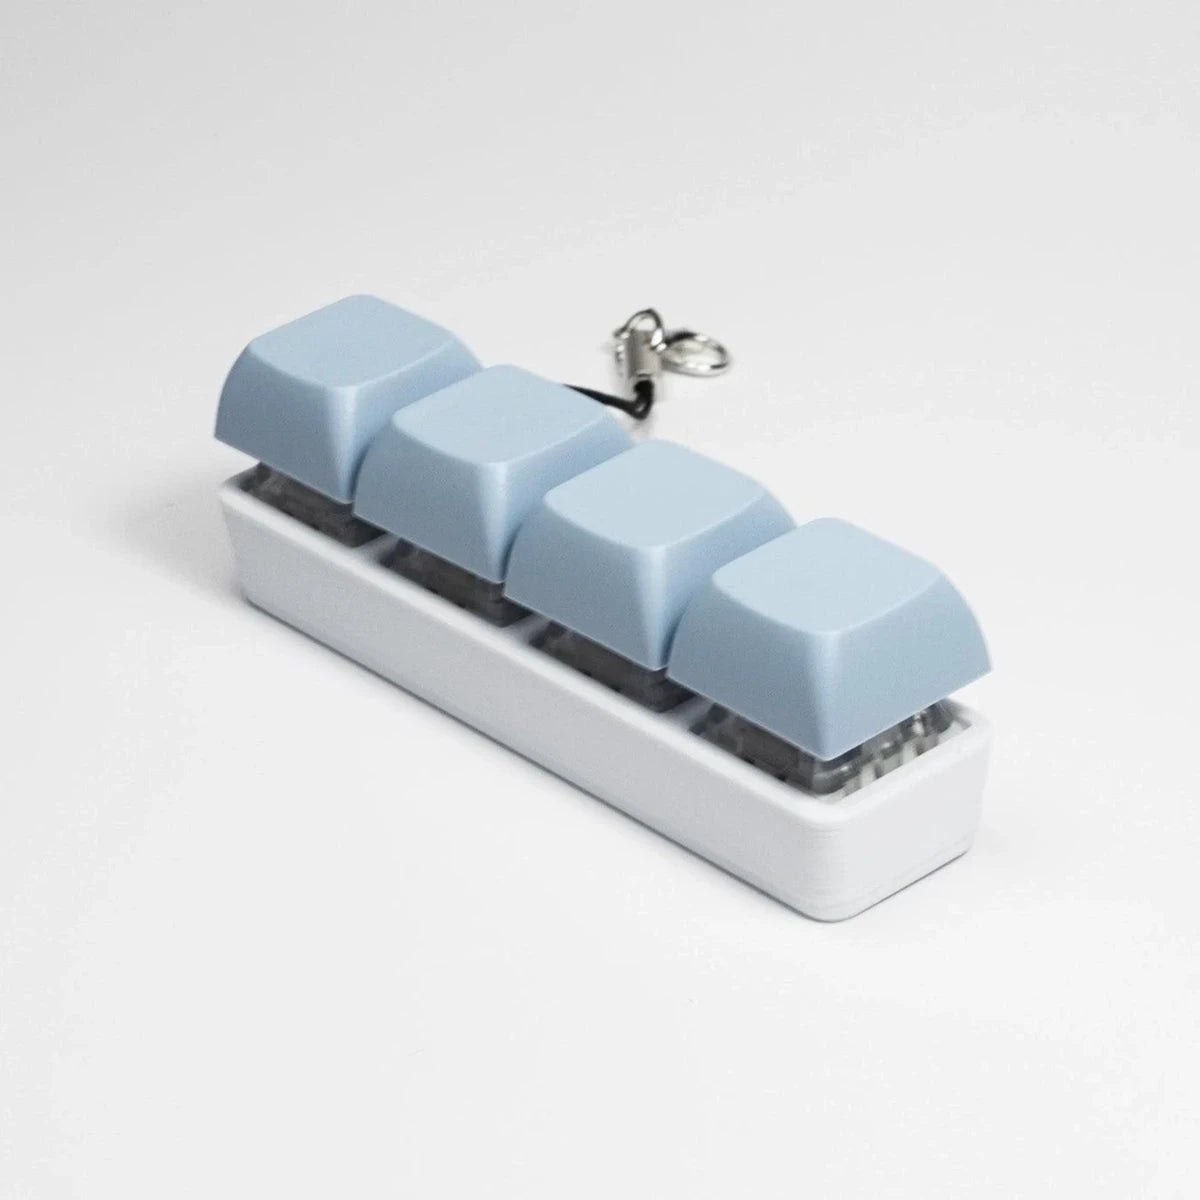 Strudel 3D 4 Key Fidget Stick - Light Blue